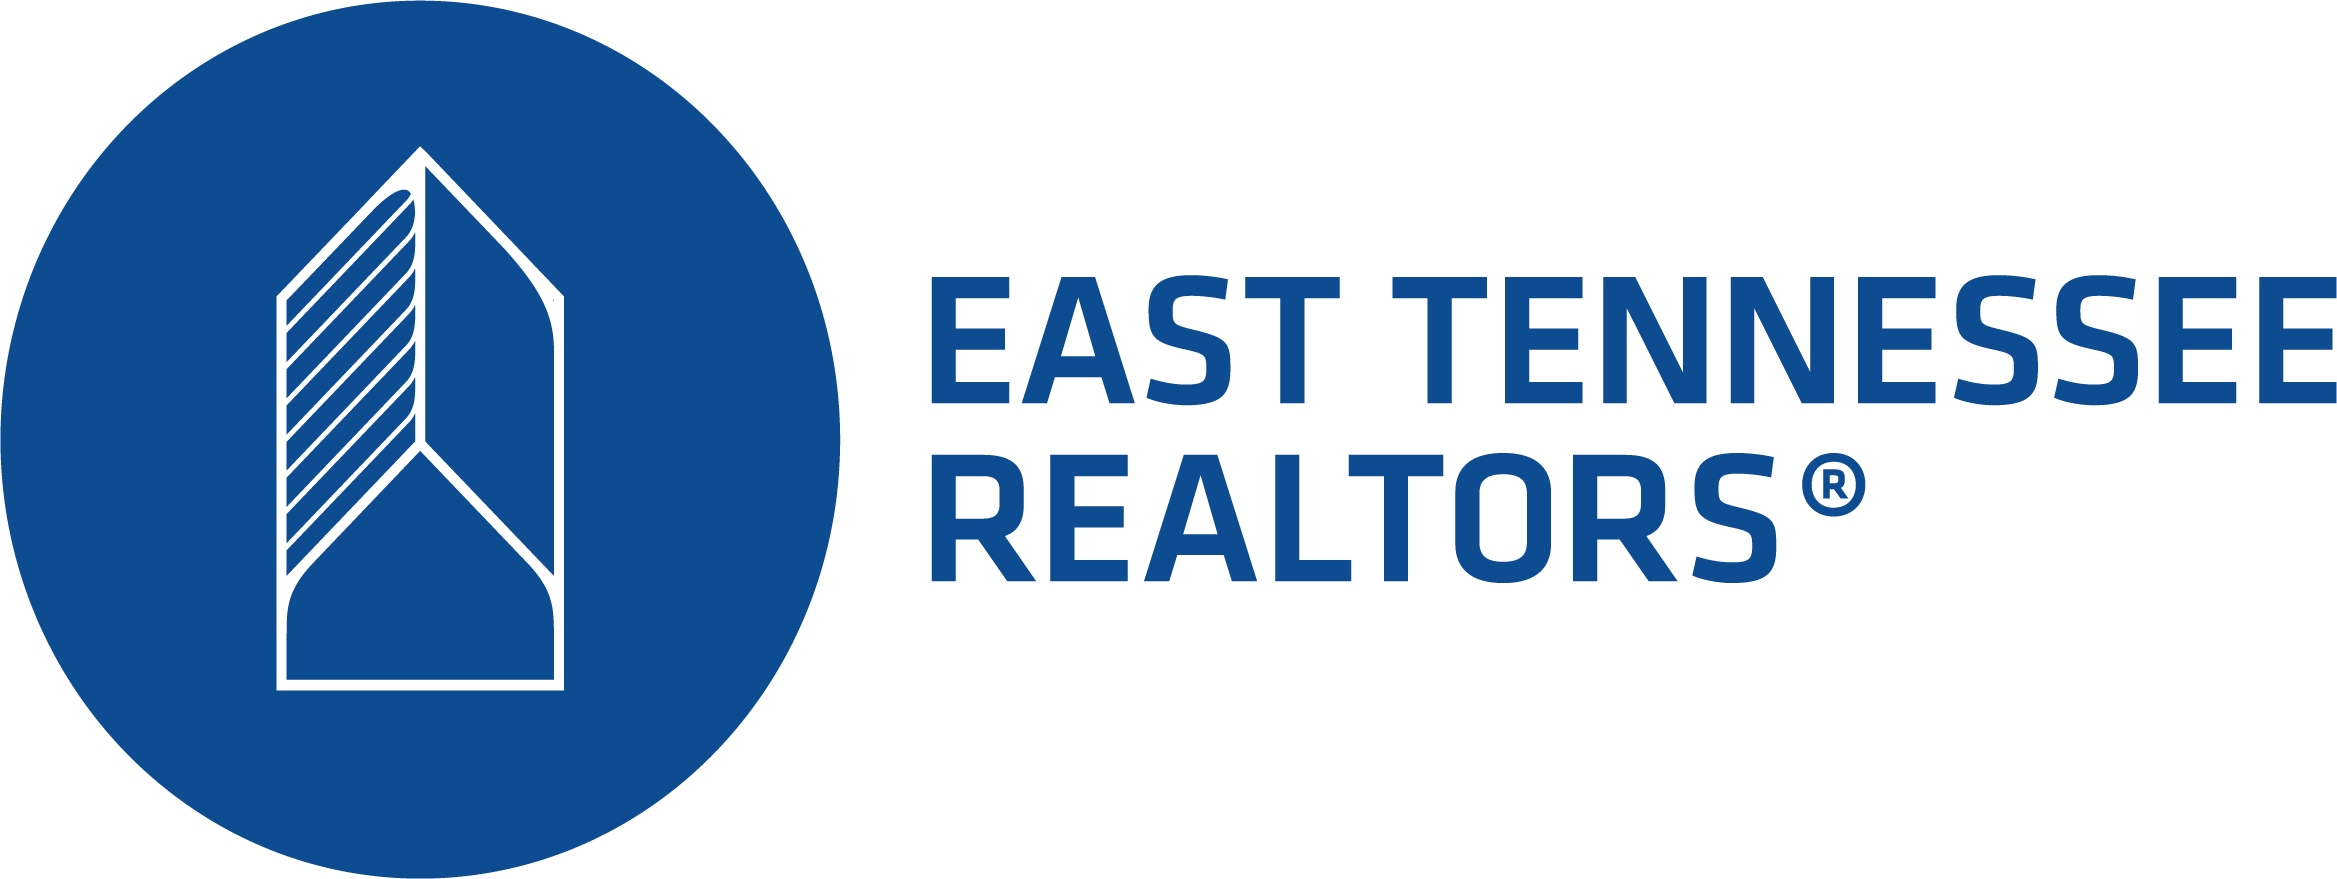 East Tennessee Realtors Logo - HORIZONTAL CIRCLE-RGB (2).png